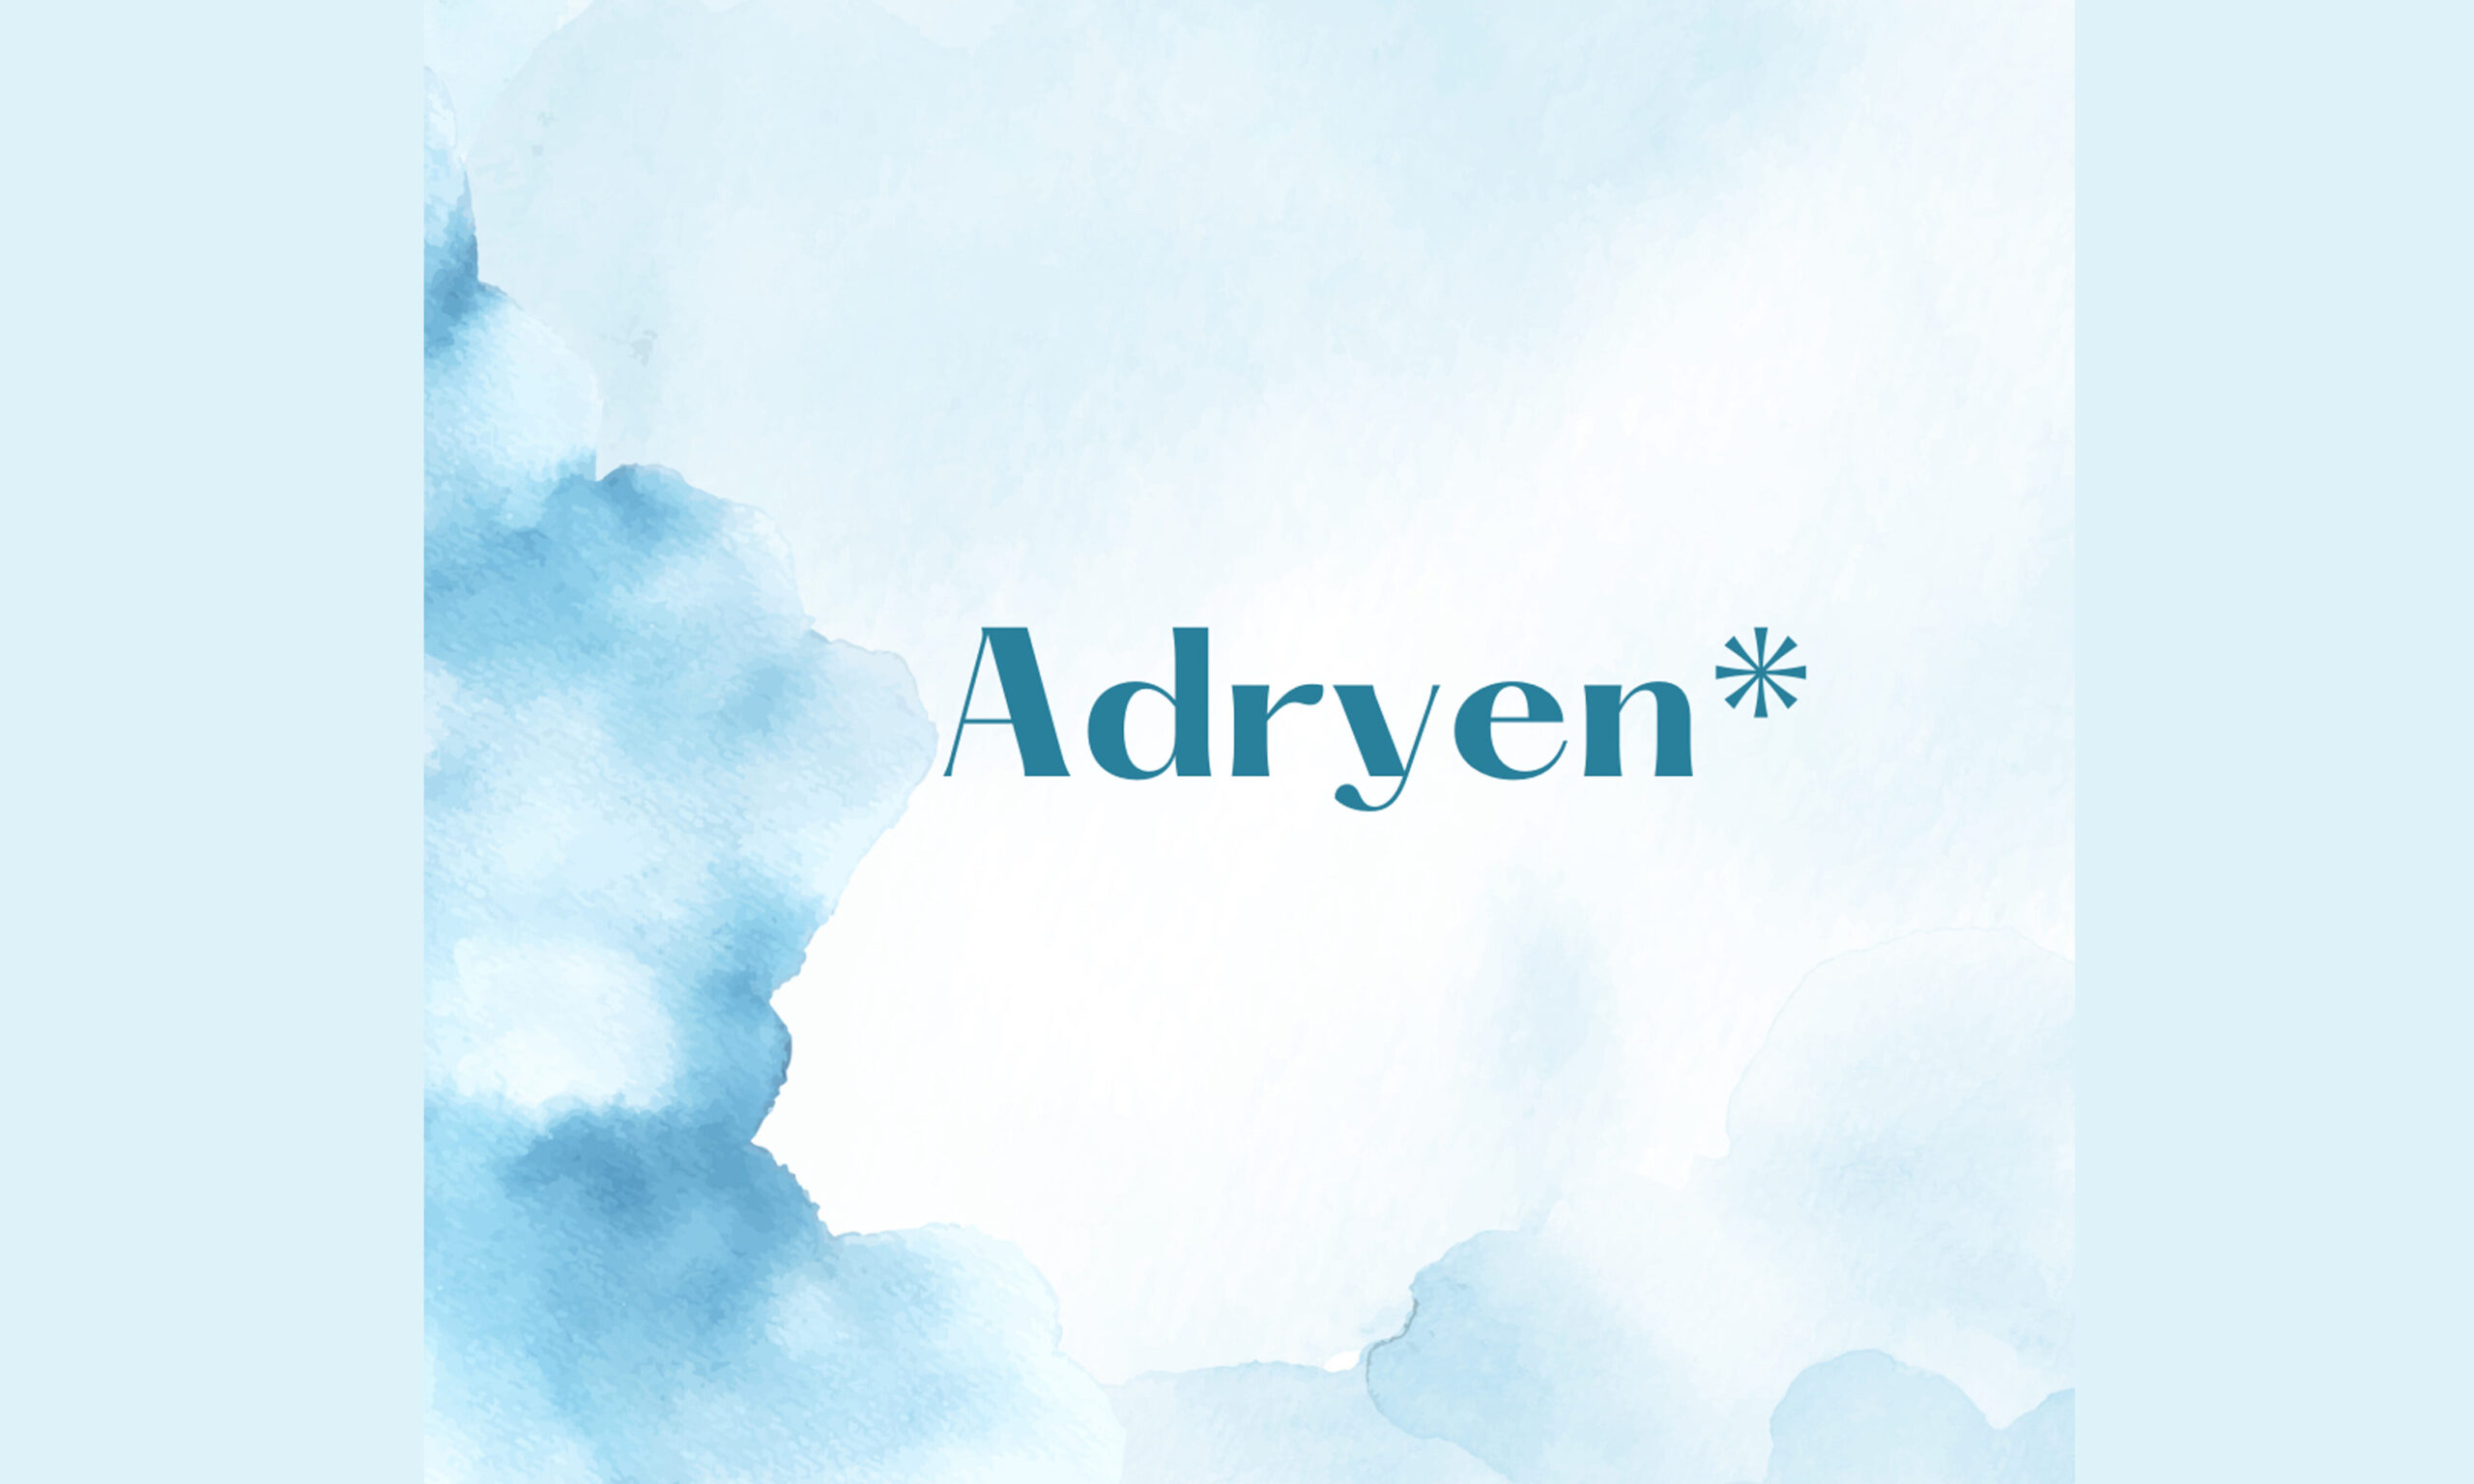 Adryen*